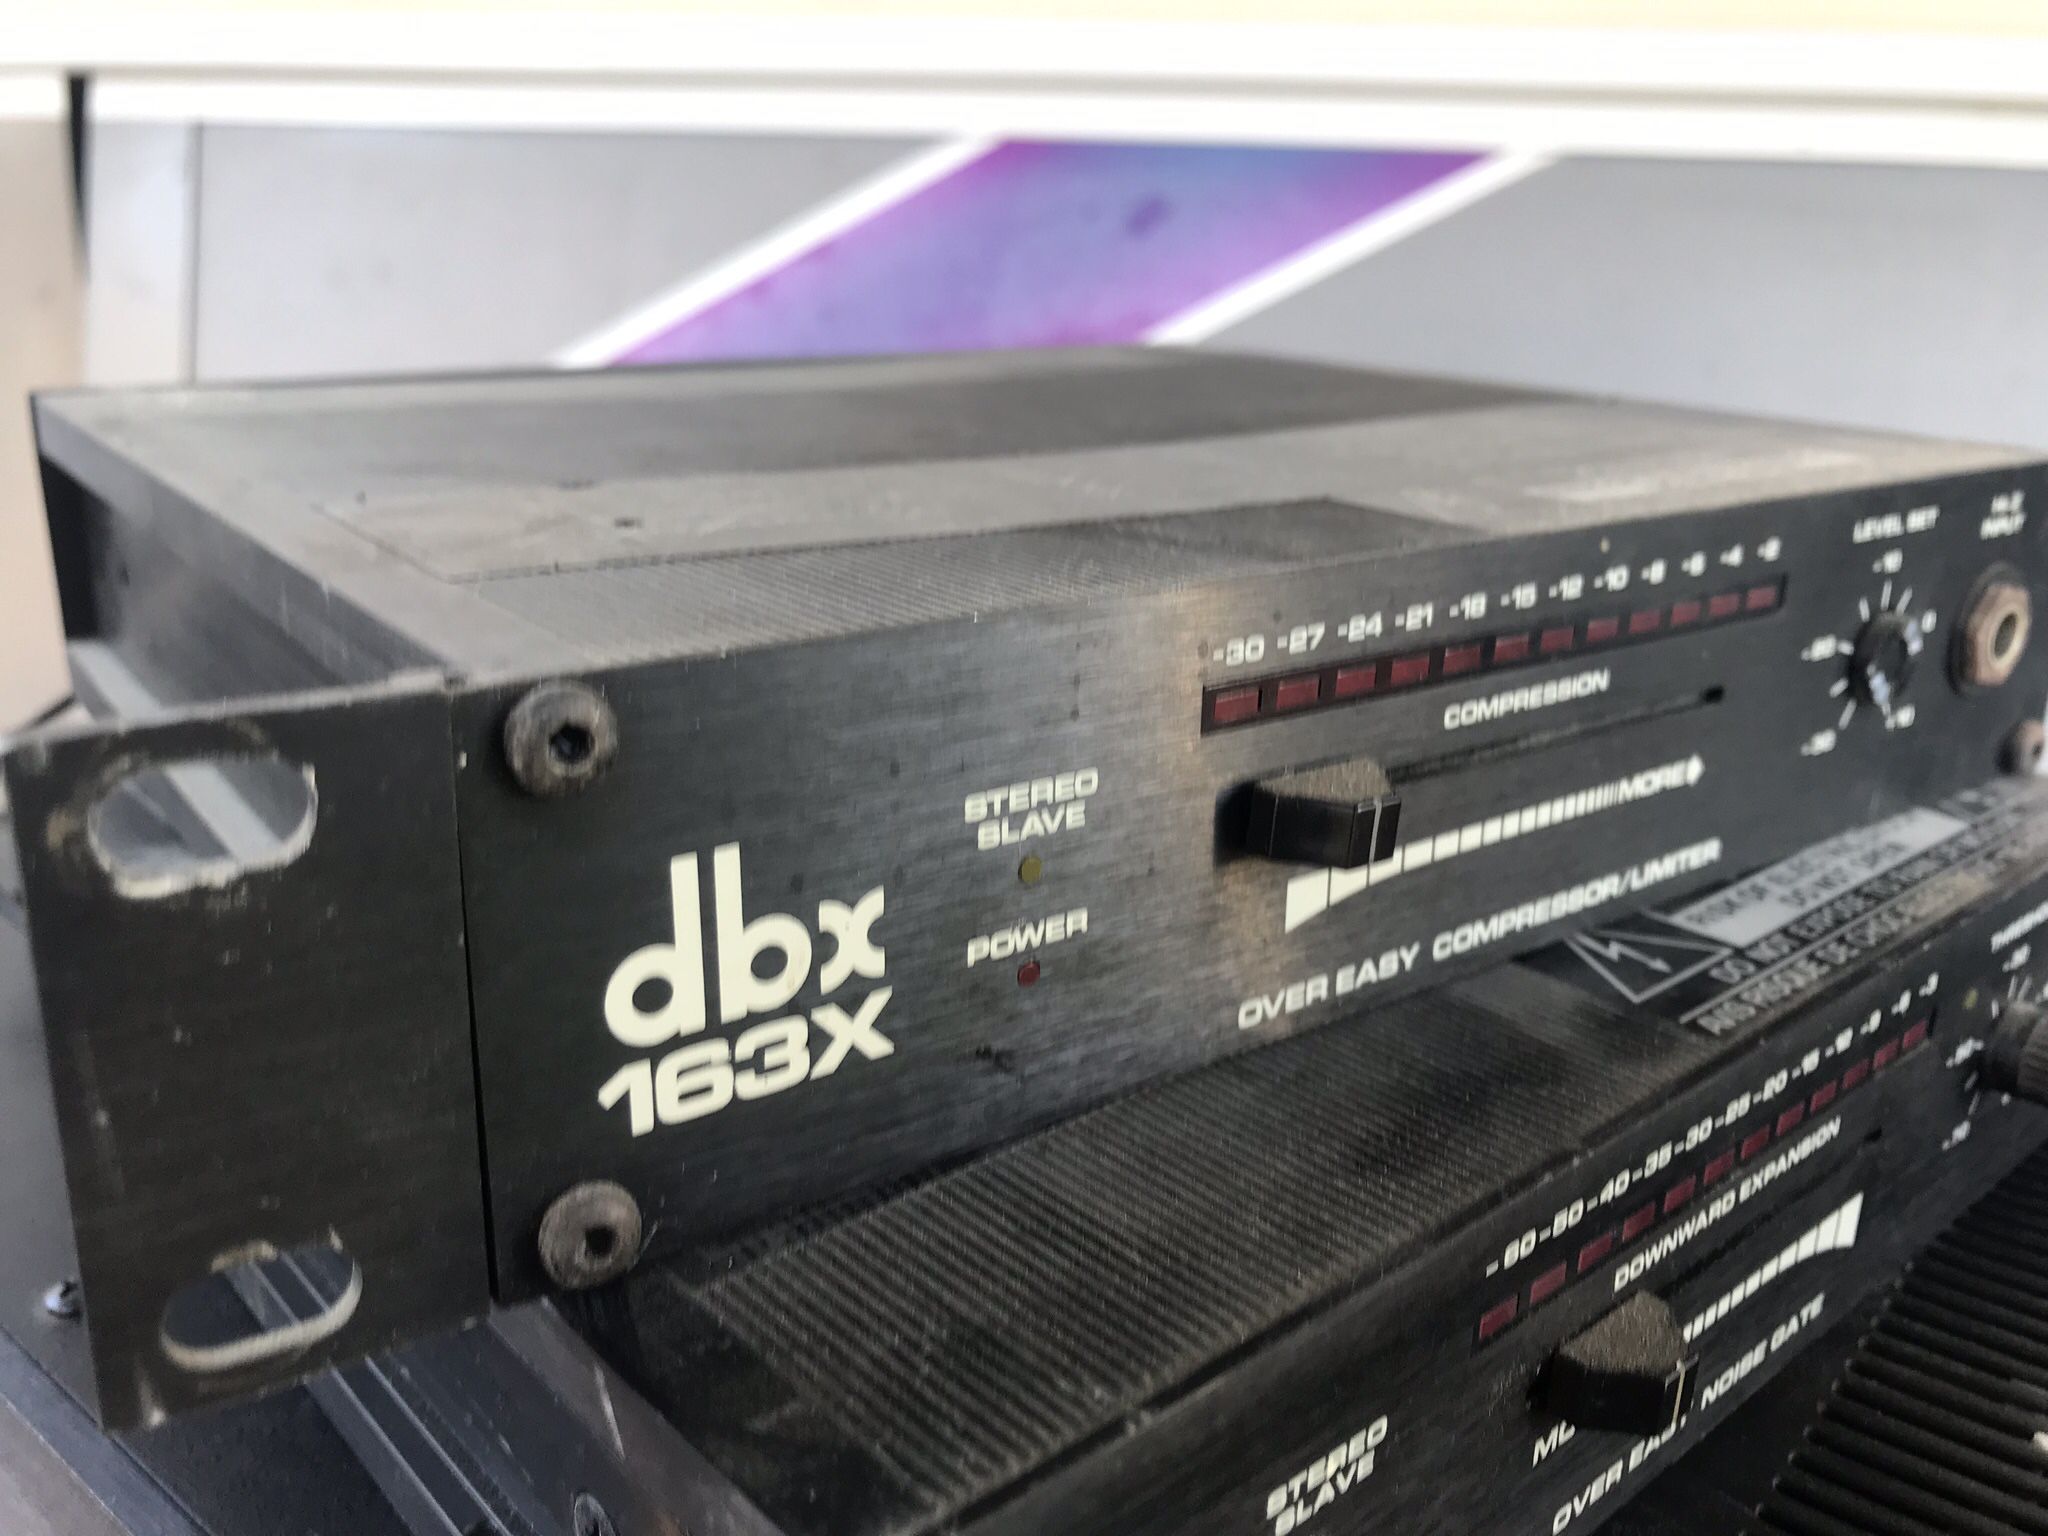 DBX 163 noise cancellation